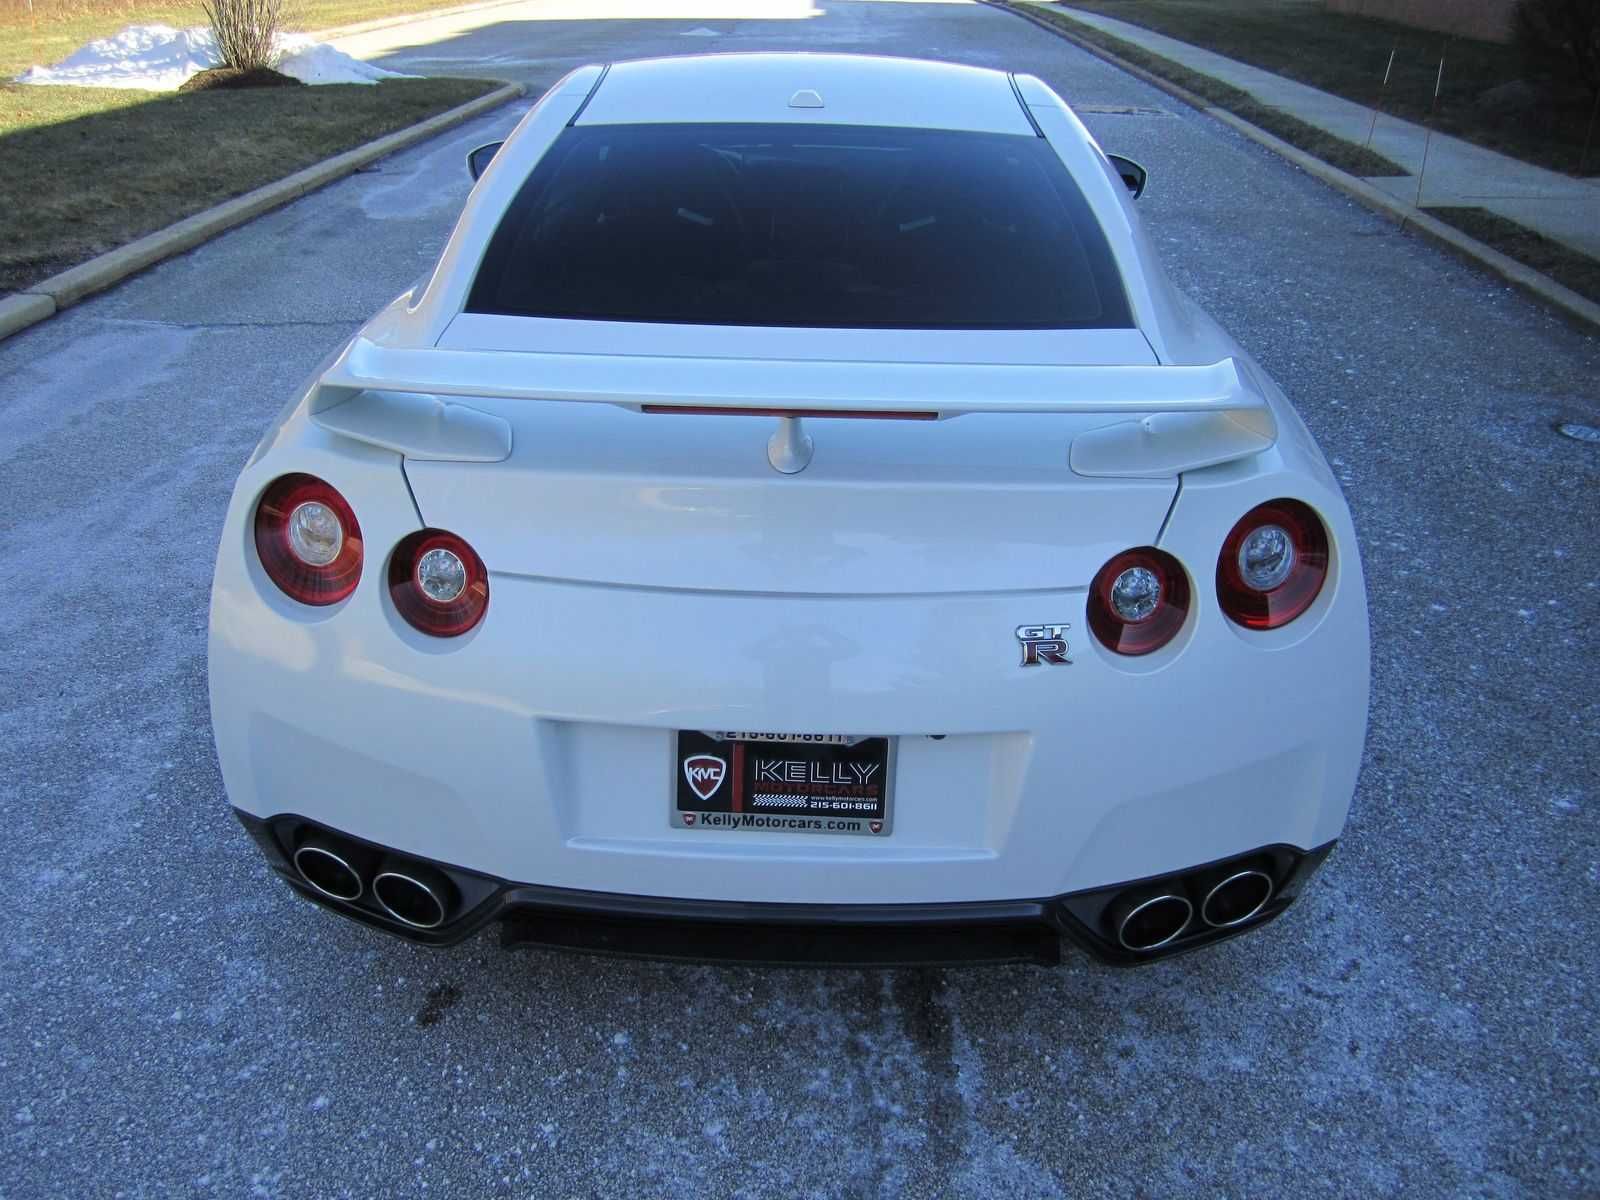 2015 Nissan GT-R Premium